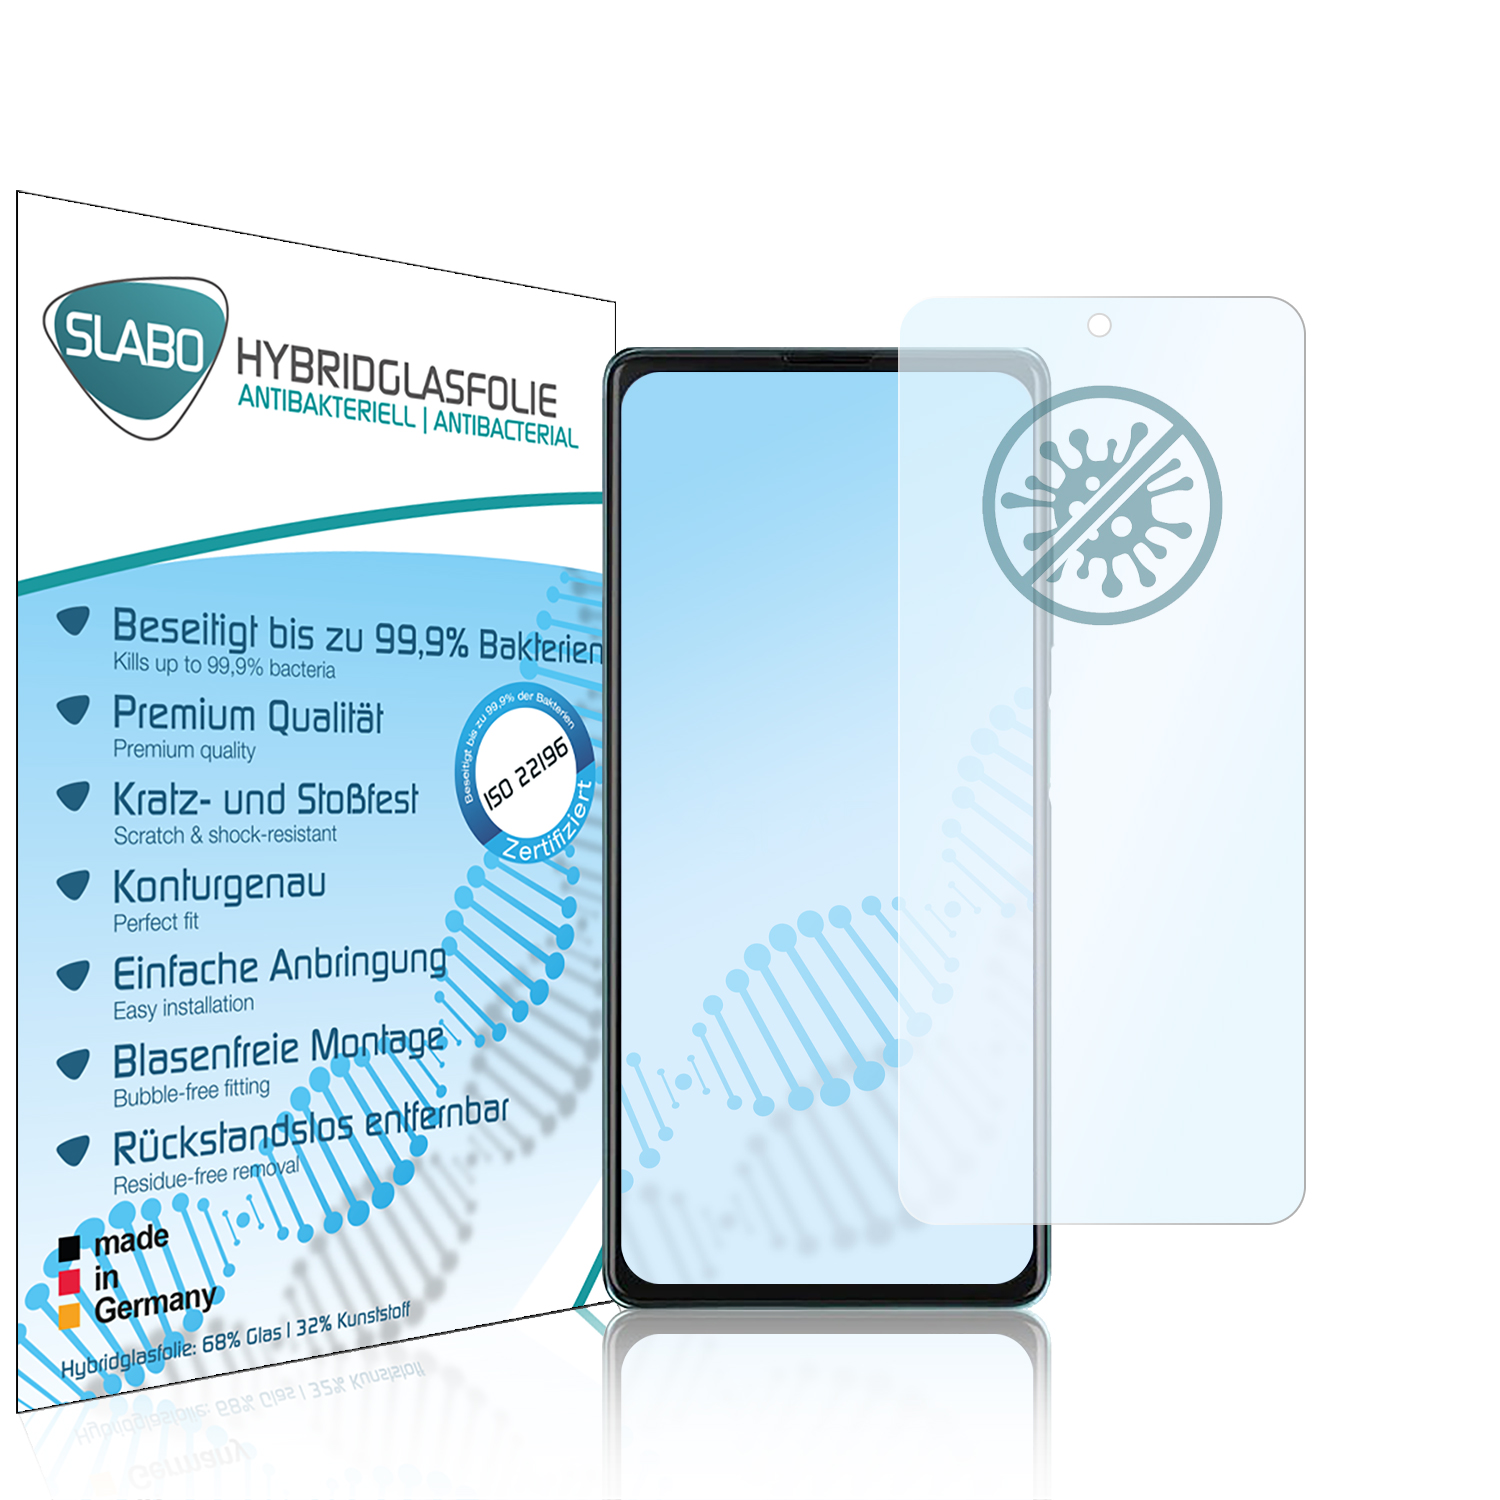 SLABO antibakteriell flexibles Hybridglas Displayschutz(für BlackBerry A100)